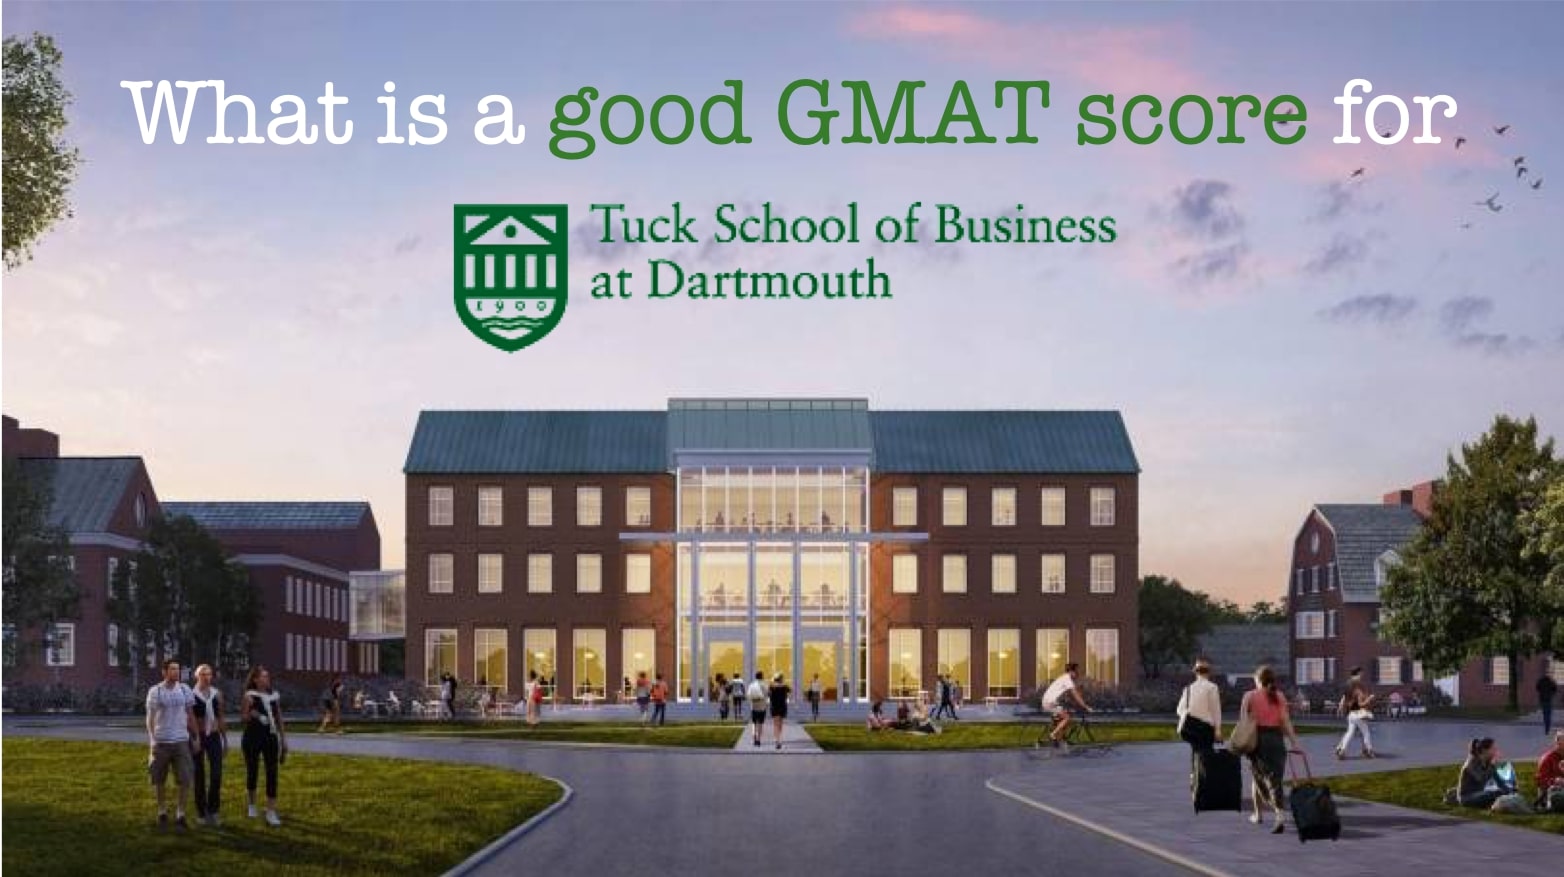 Good GMAT score for Dartmouth Tuck